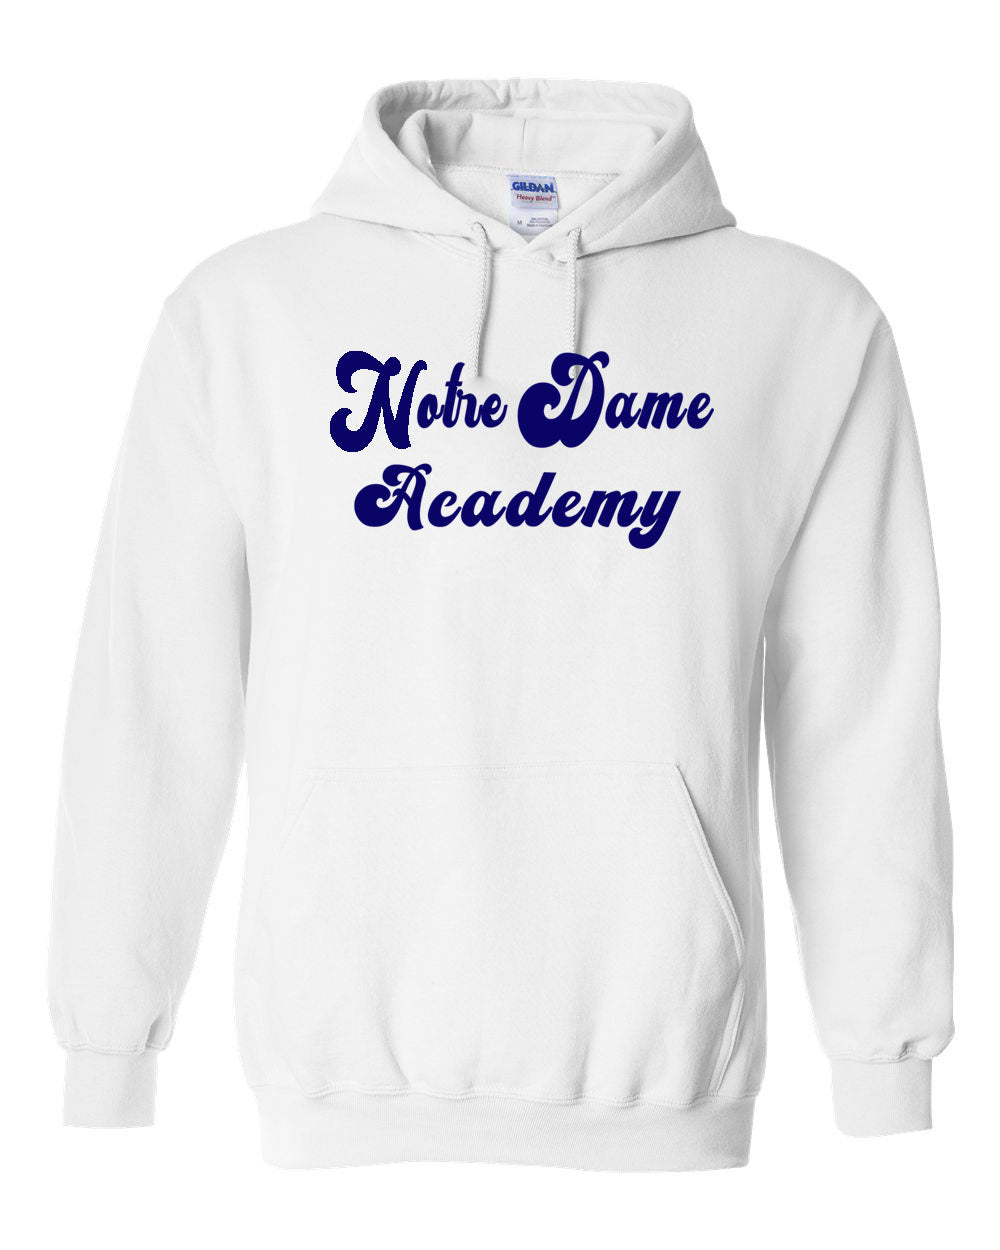 Notre Dame Academy Hooded Sweatshirt